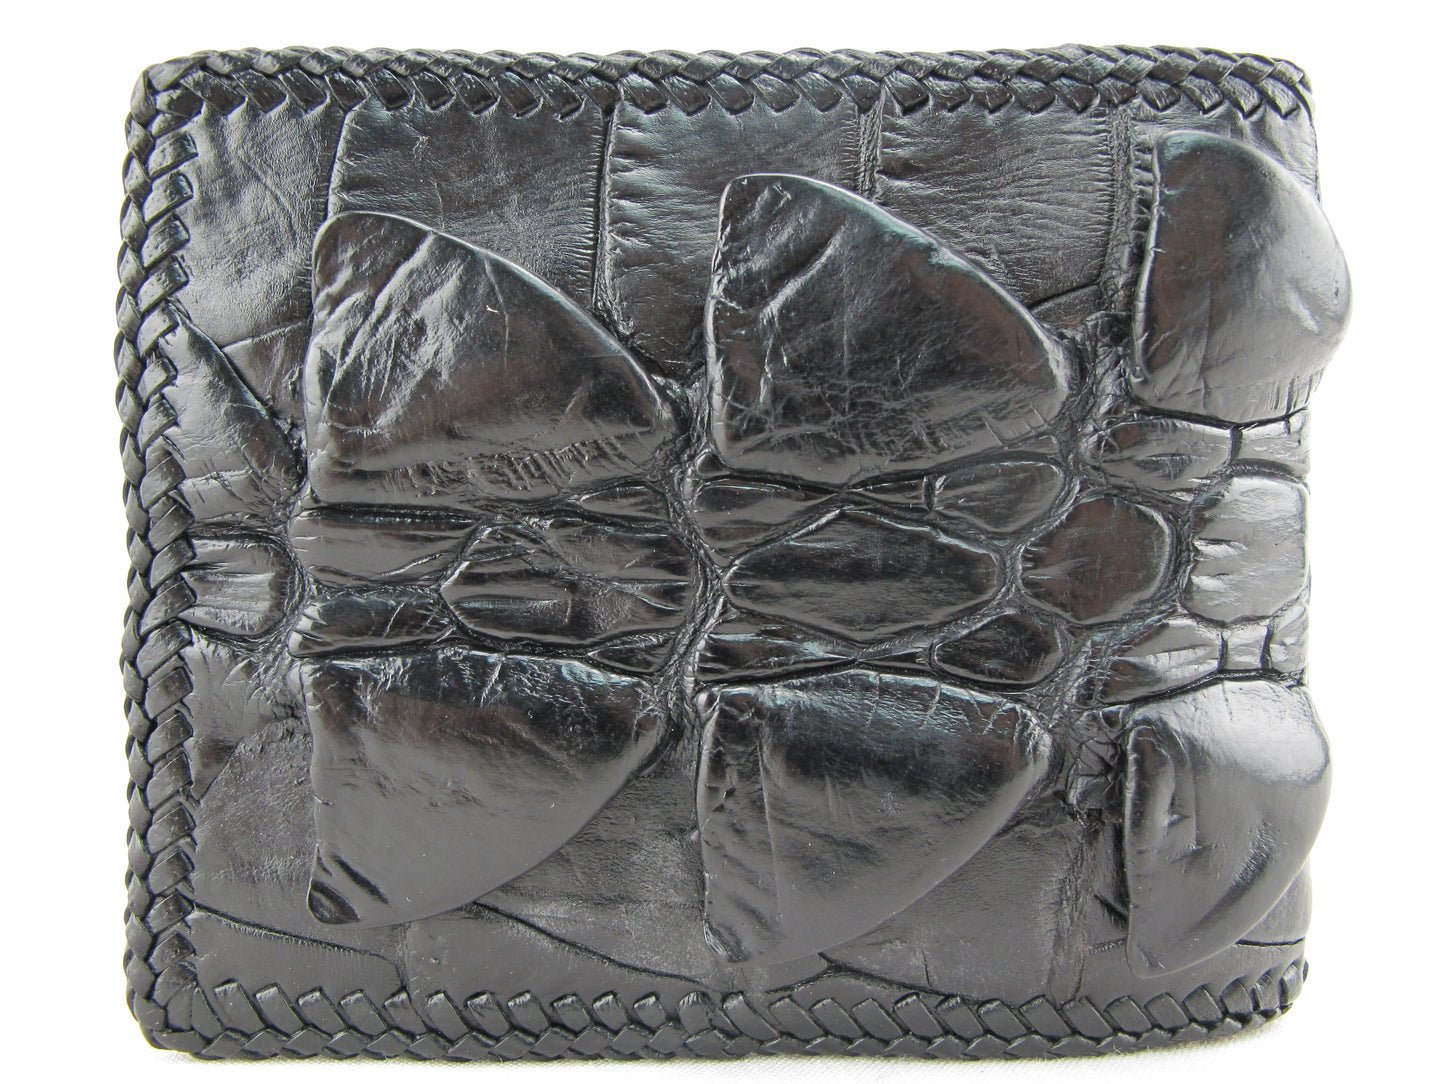 Genuine Crocodile Tail Skin Leather Handmade Bifold Wallet